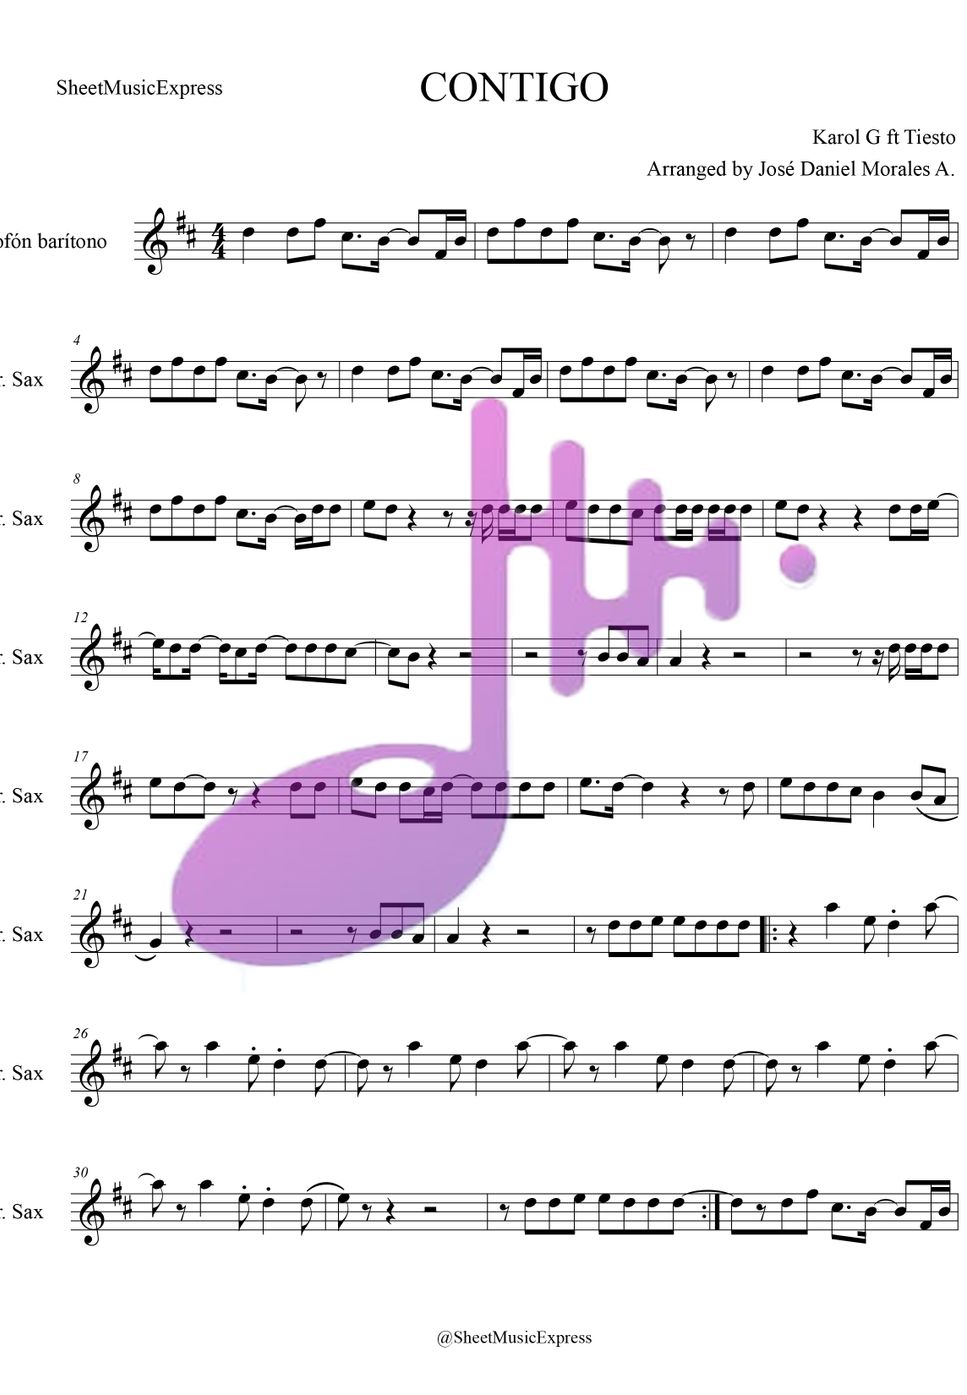 Karol G - Contigo Karol G Tiesto Sheet Music Baritone Sax (Latin) by Sheet Music Express